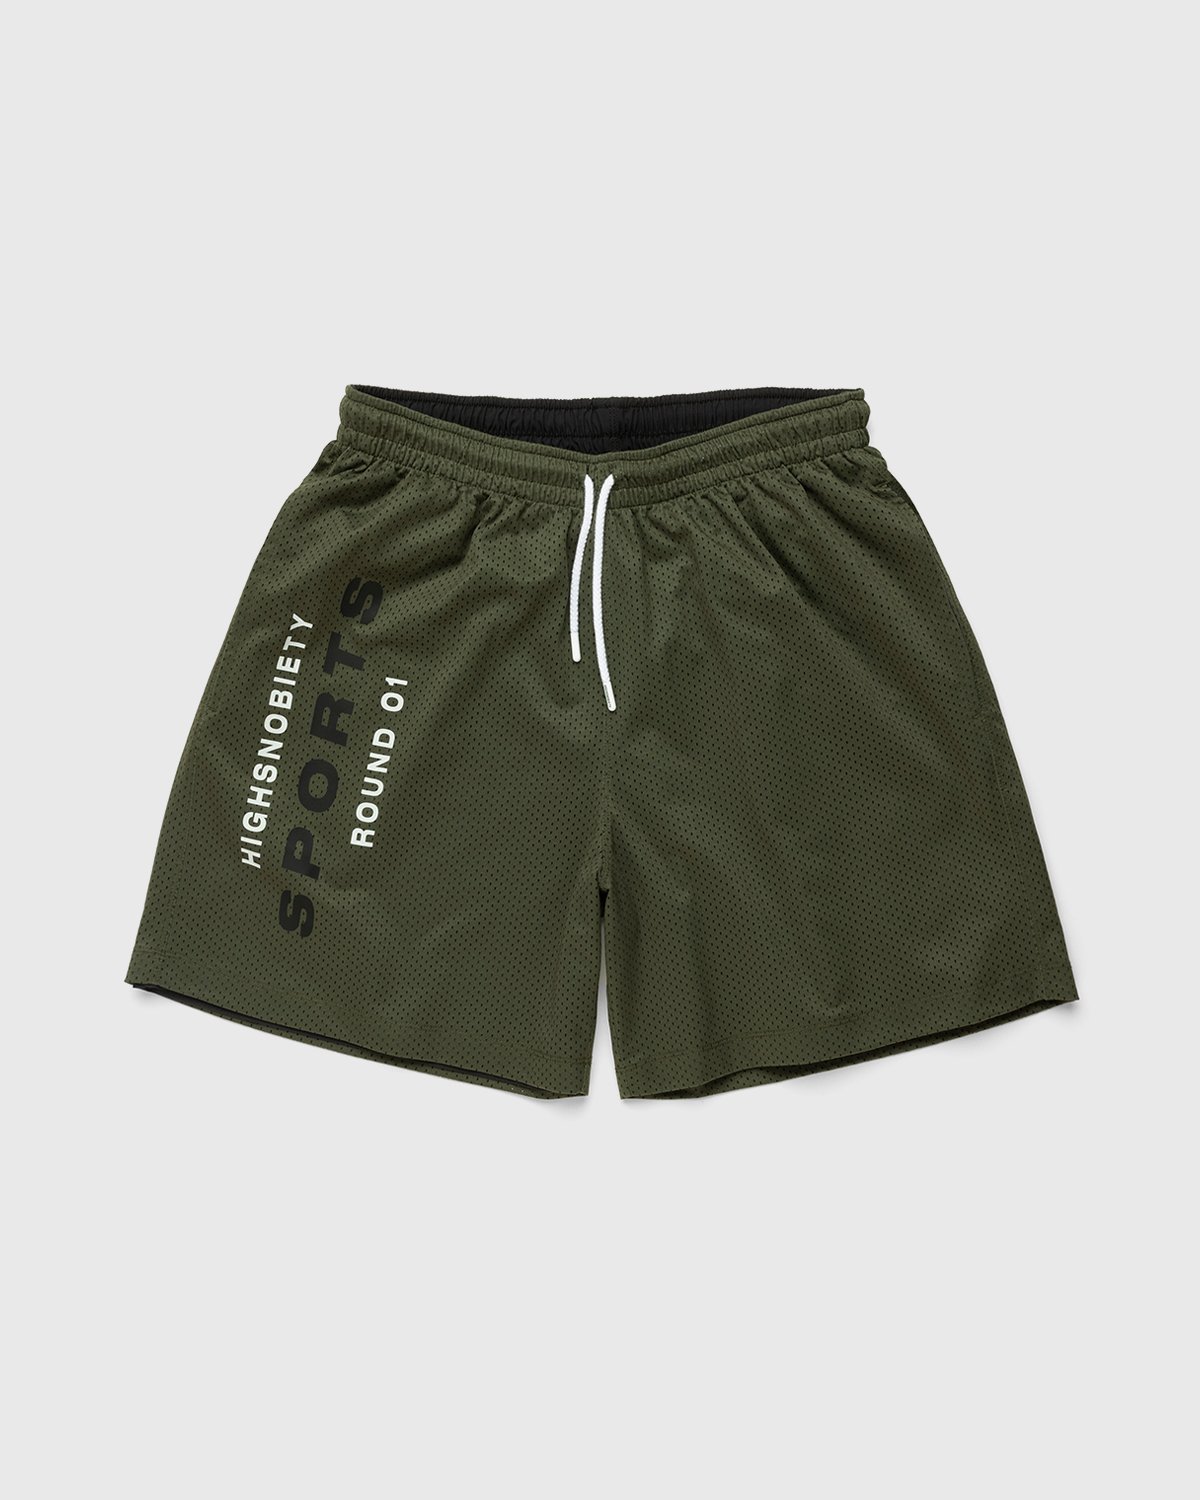 Highsnobiety - HS Sports Reversible Mesh Shorts Black/Khaki - Clothing - Green - Image 1